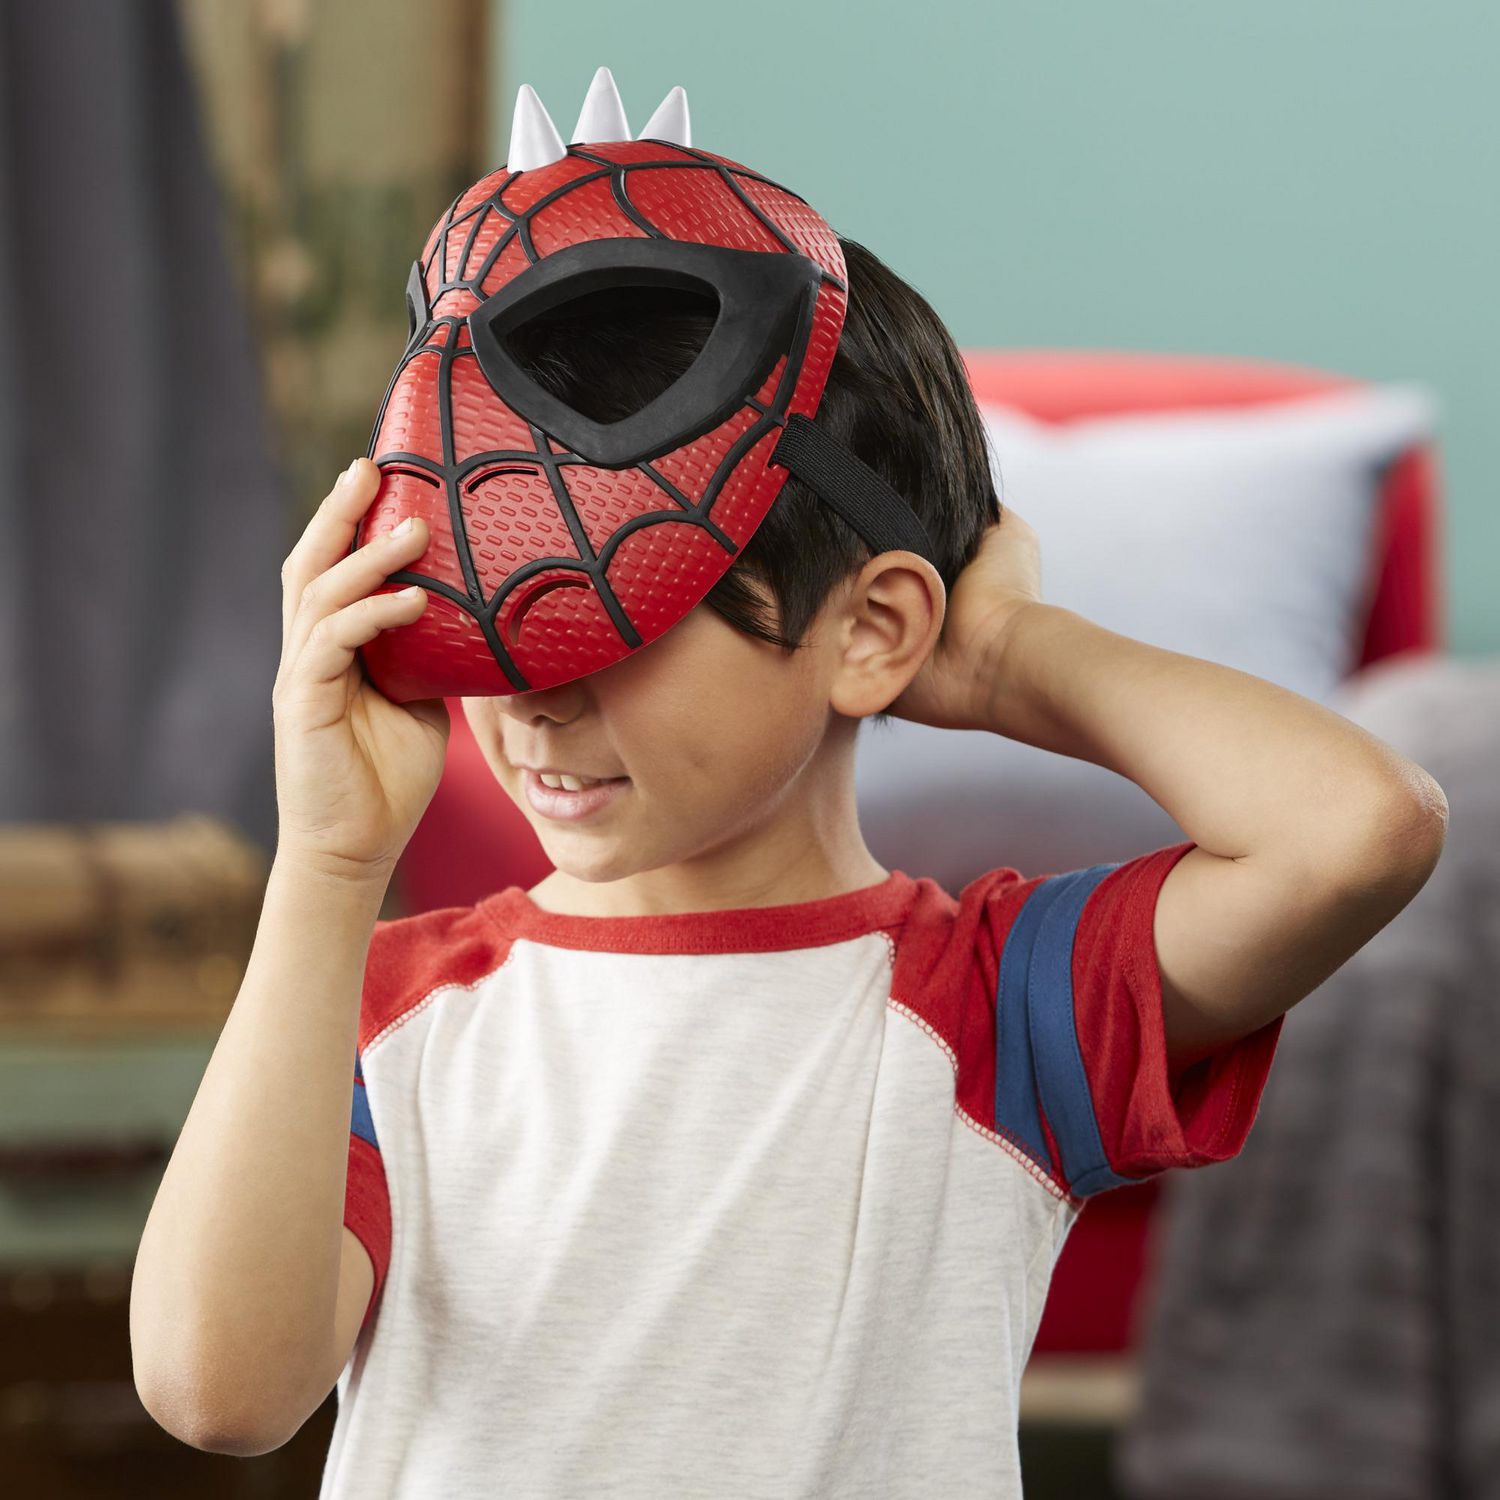 Déguisement SpiderMan Into the Spider-Verse Enfant Garçon